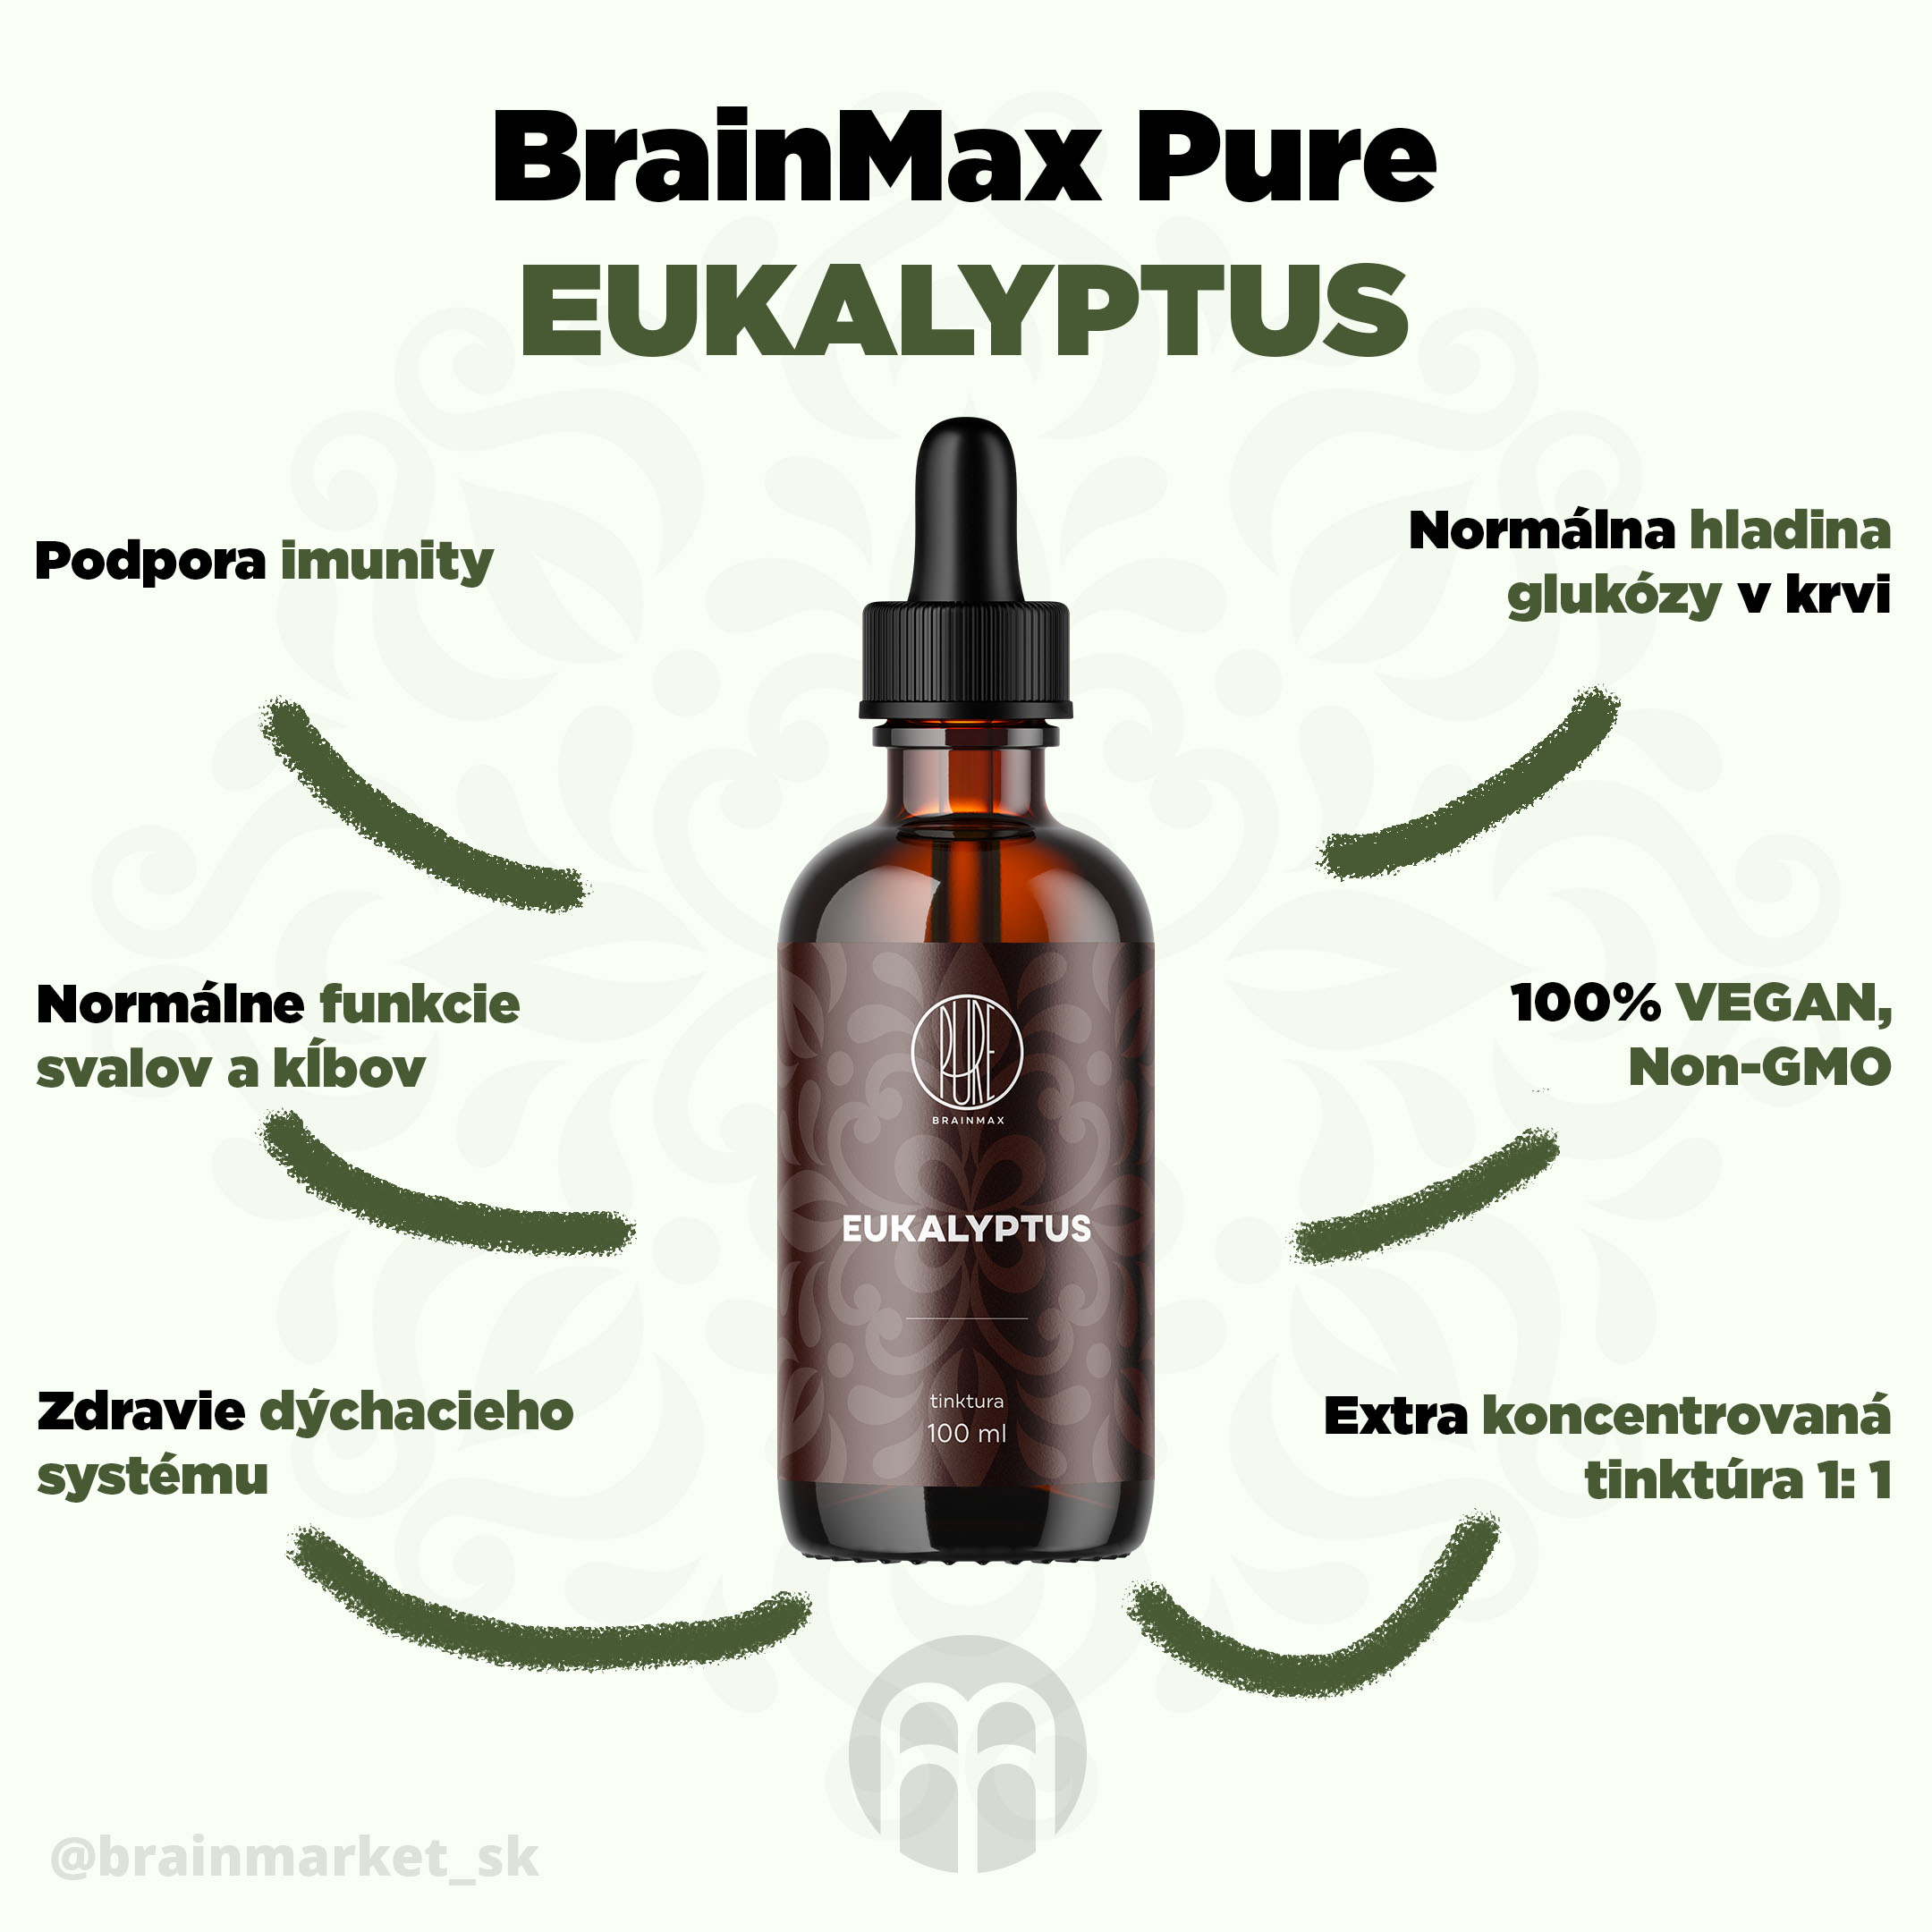 eukalyptus_infografika_brainmarket_sk_1